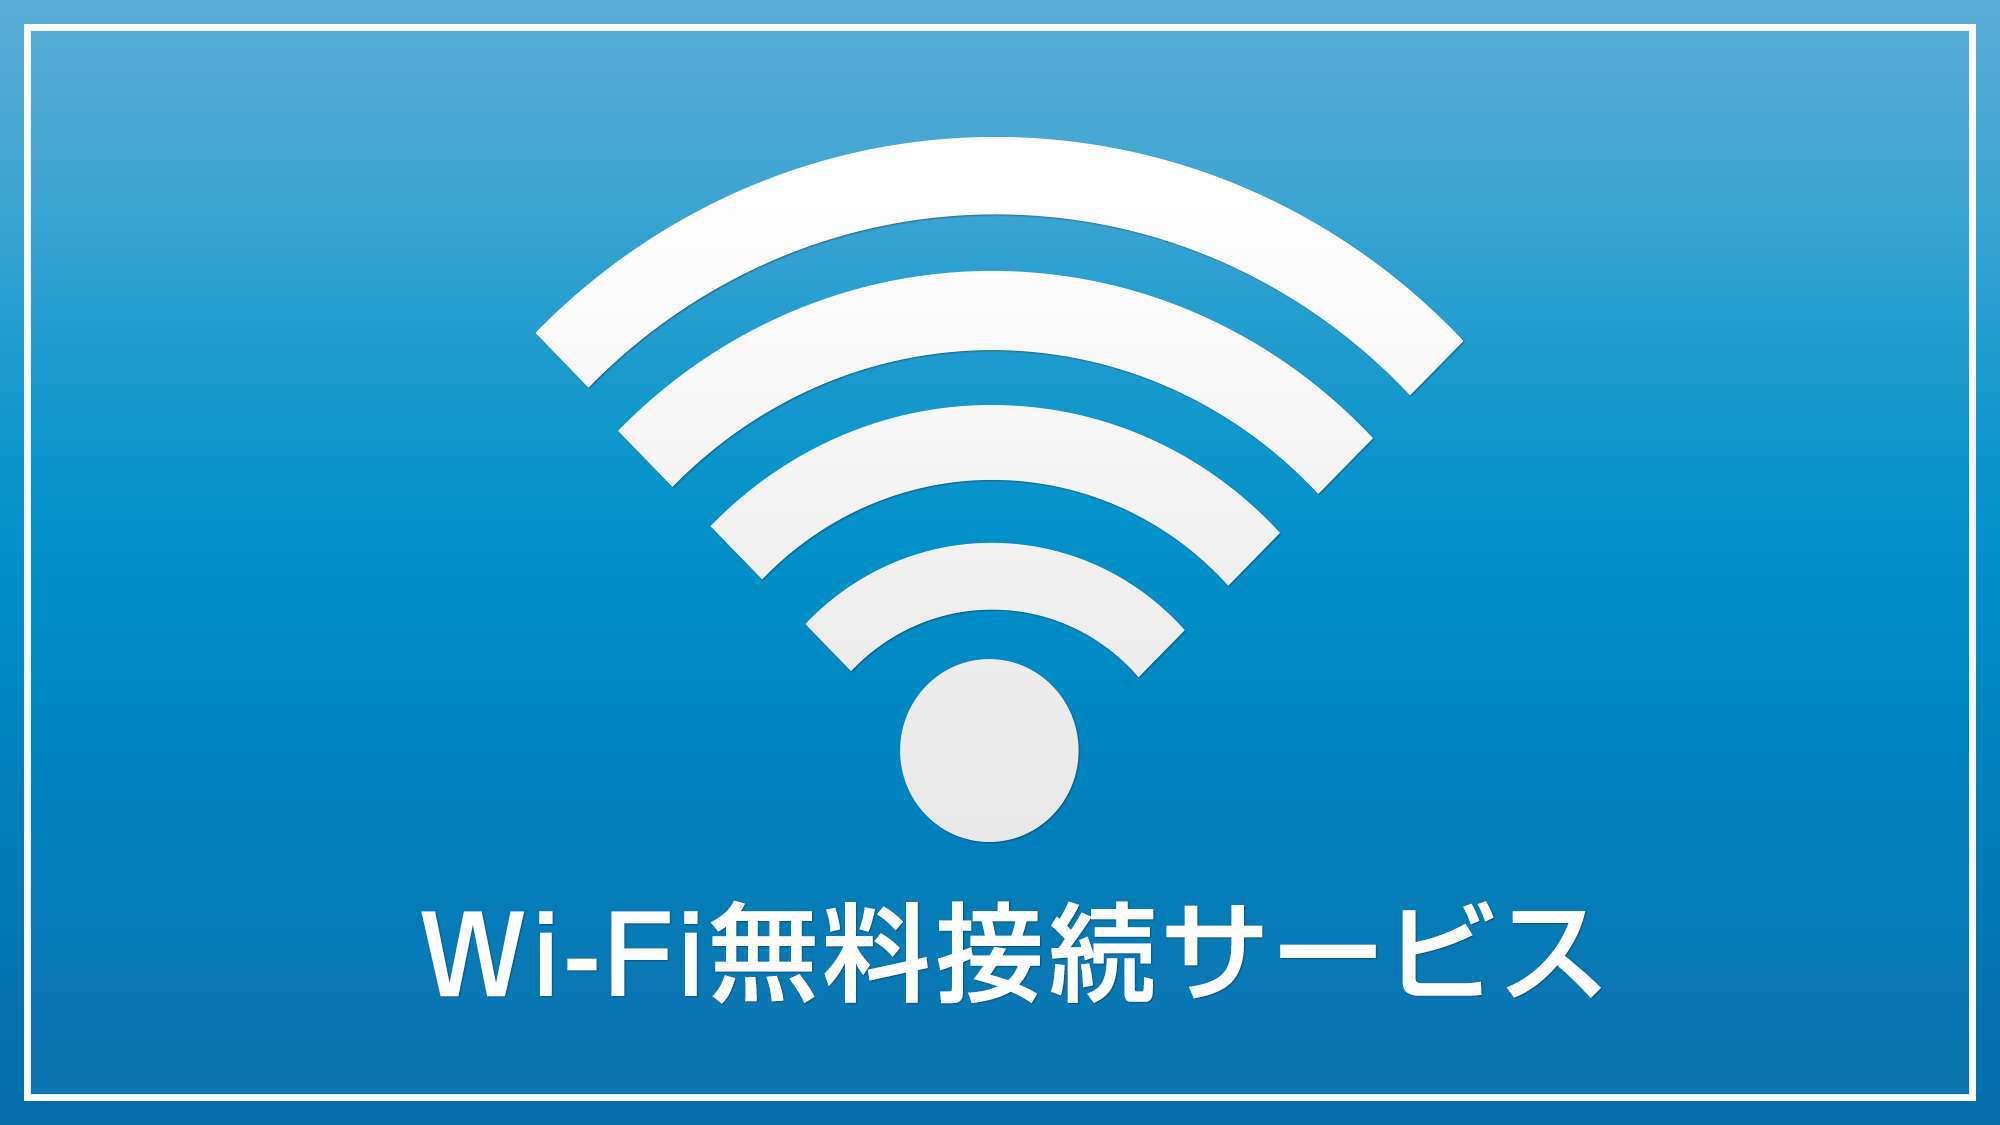 Wi-fi無料